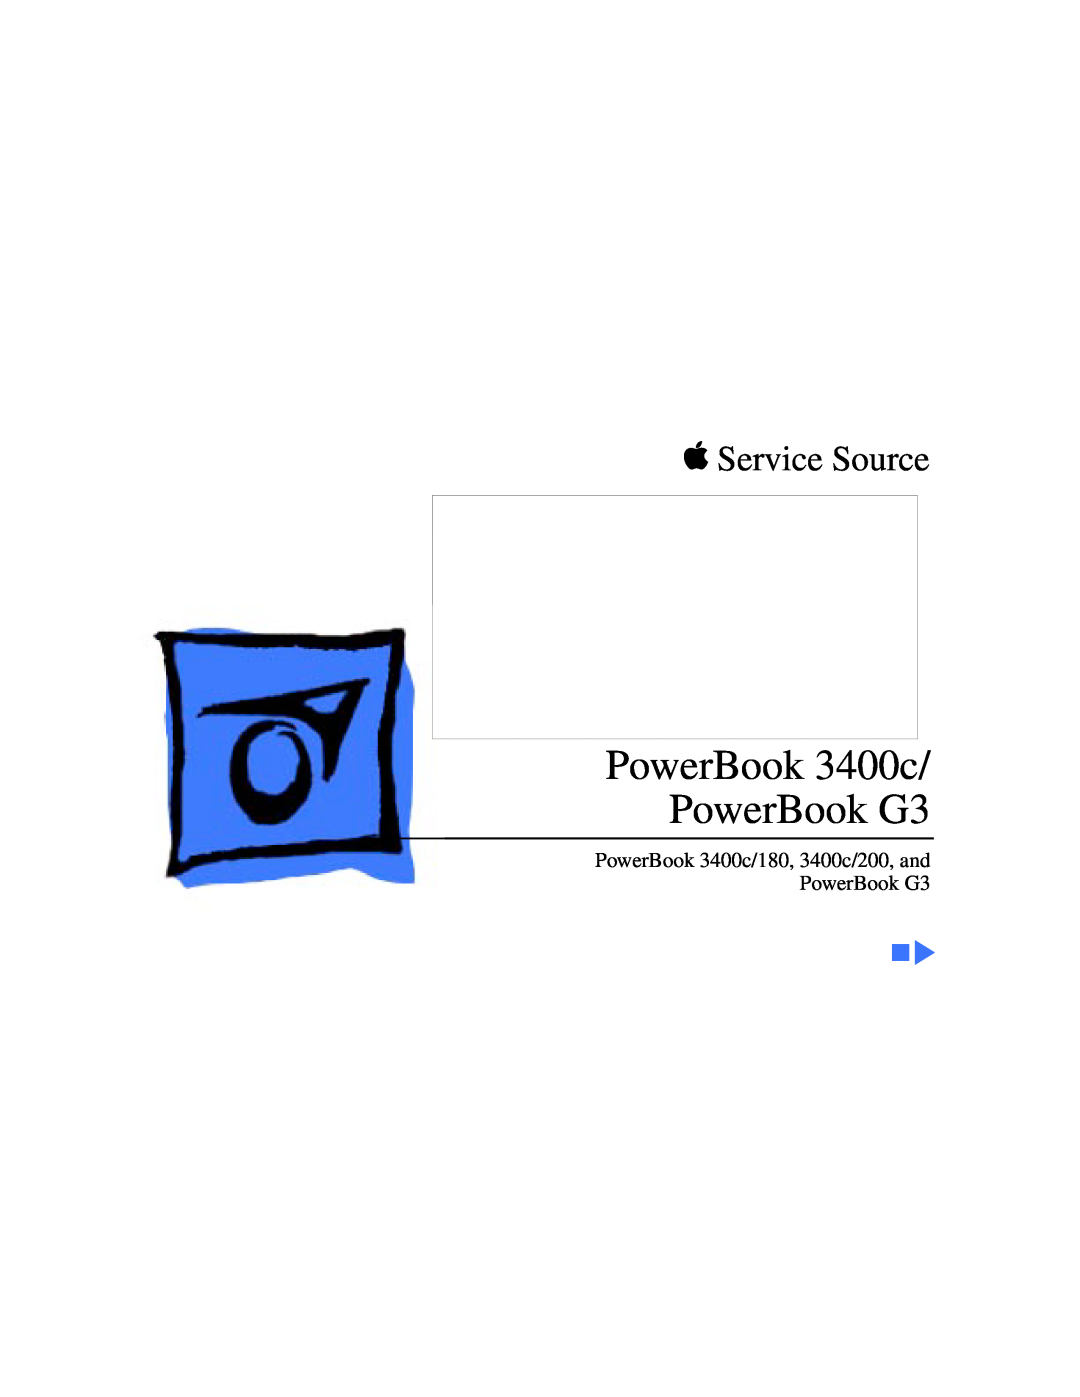 Apple 3400C/200 manual PowerBook 3400c/ PowerBook G3, K Service Source, PowerBook 3400c/180, 3400c/200, and PowerBook G3 